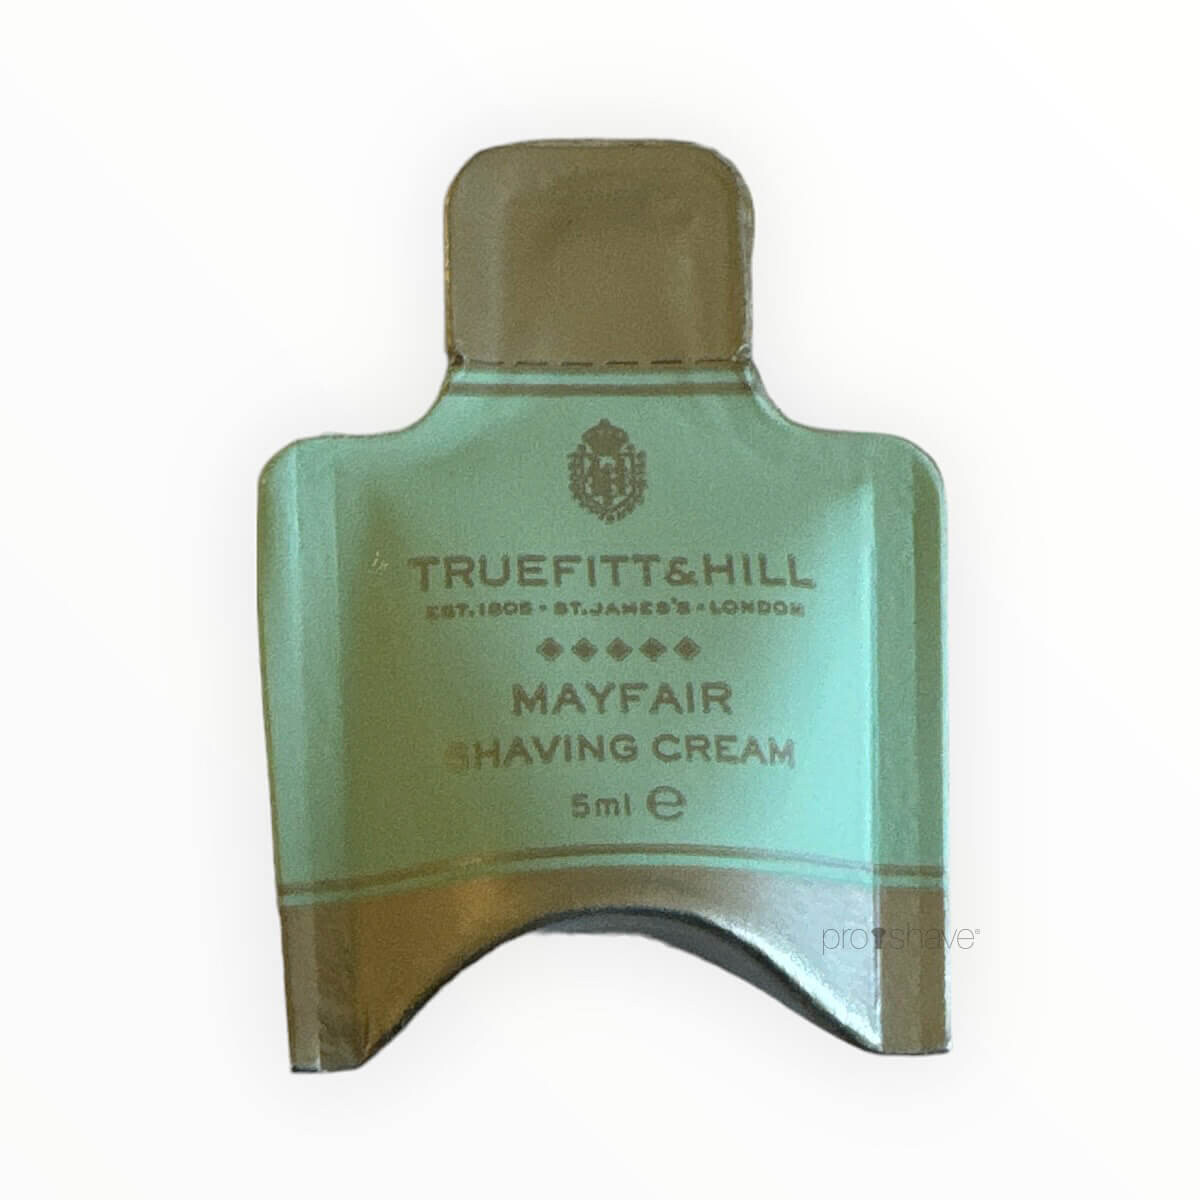 Billede af Truefitt & Hill Mayfair Shaving Cream Sample Pack, 5 ml.